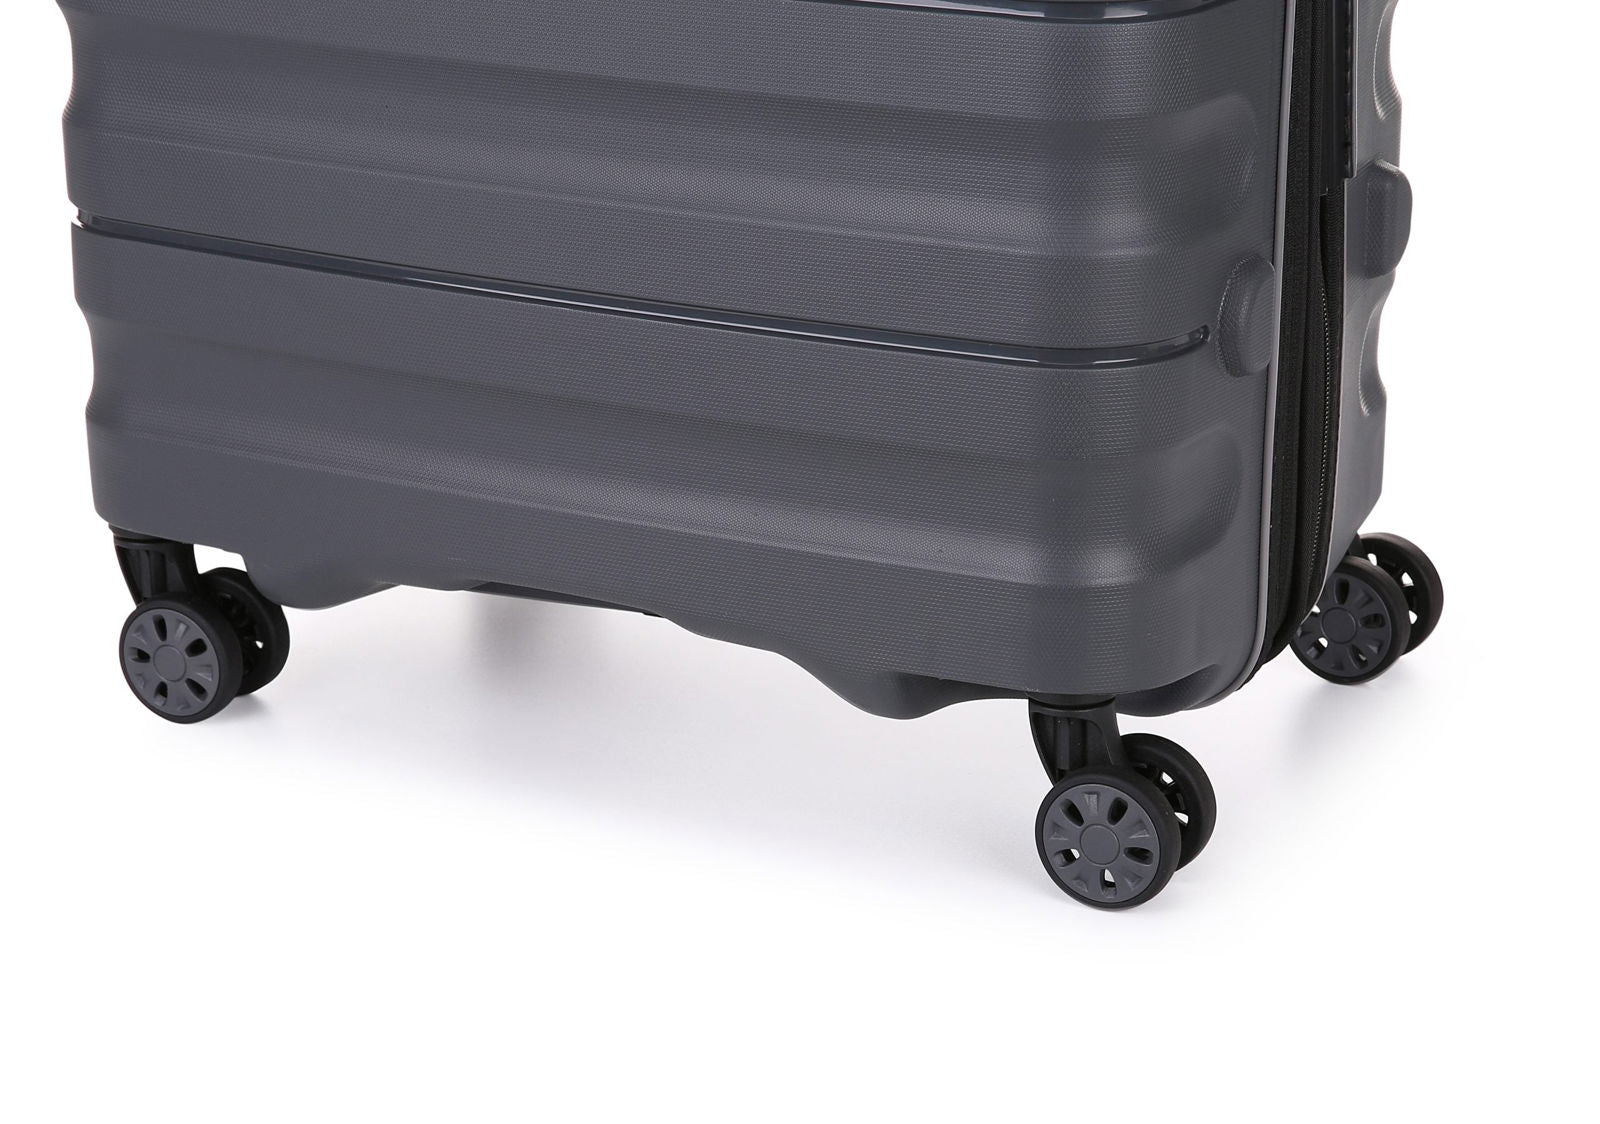 Antler - Lincoln Medium 68cm Hardside 4 Wheel Suitcase - Charcoal - rainbowbags